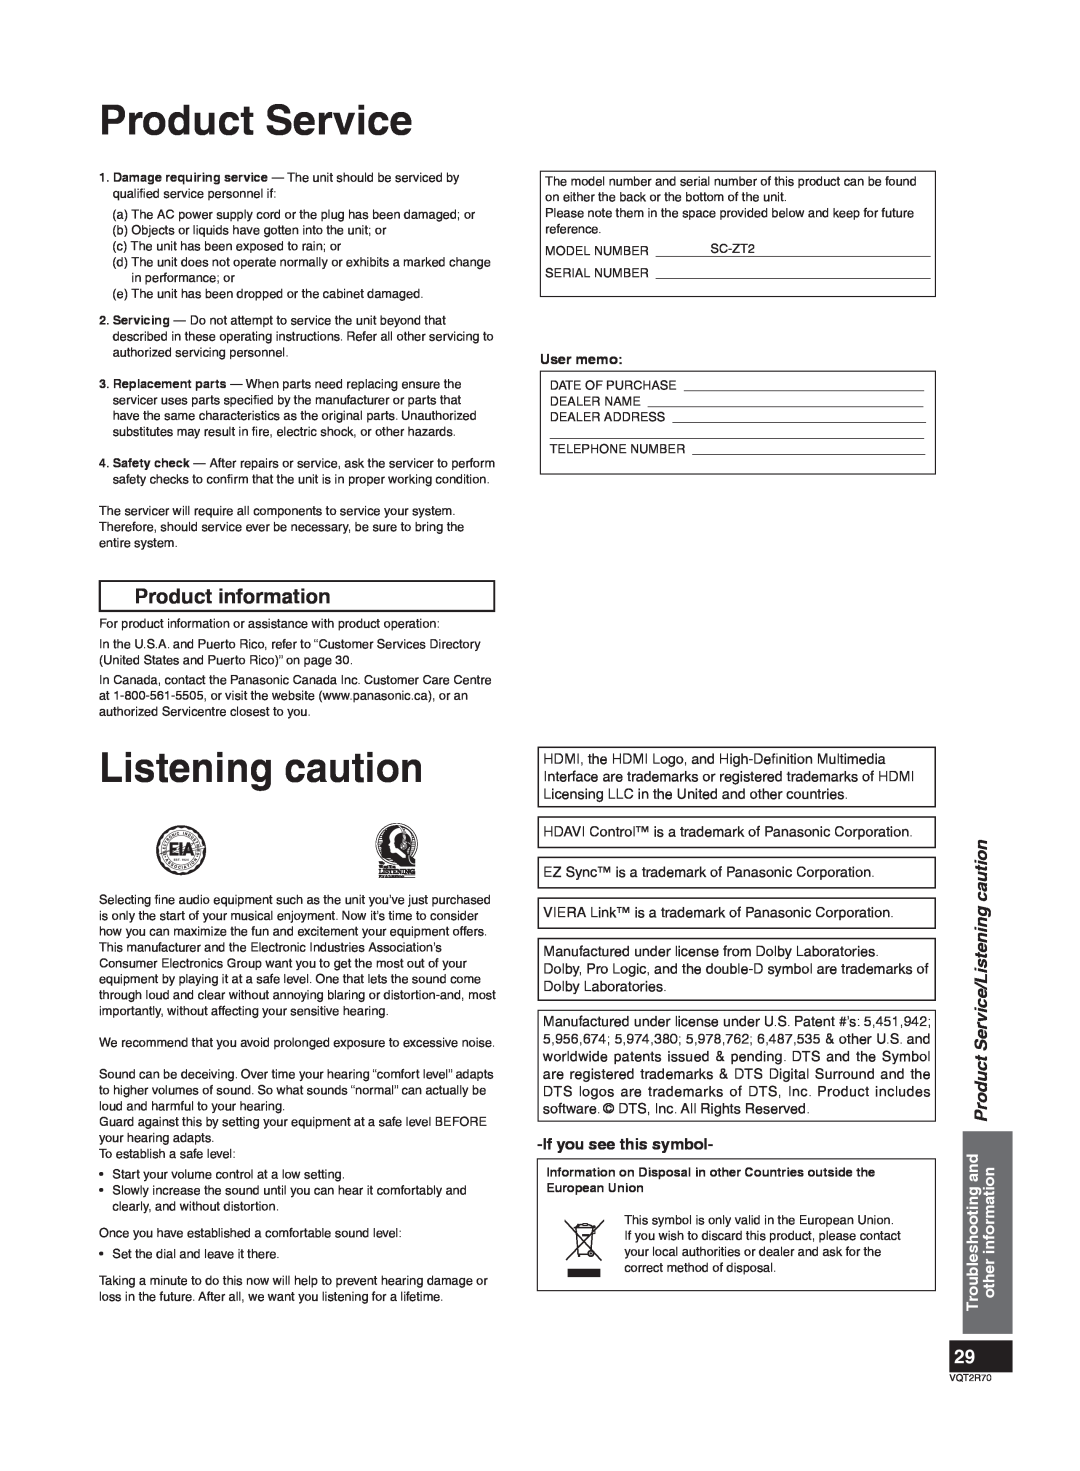 Panasonic SC-ZT2 warranty Product Service, Listening caution, Product information 